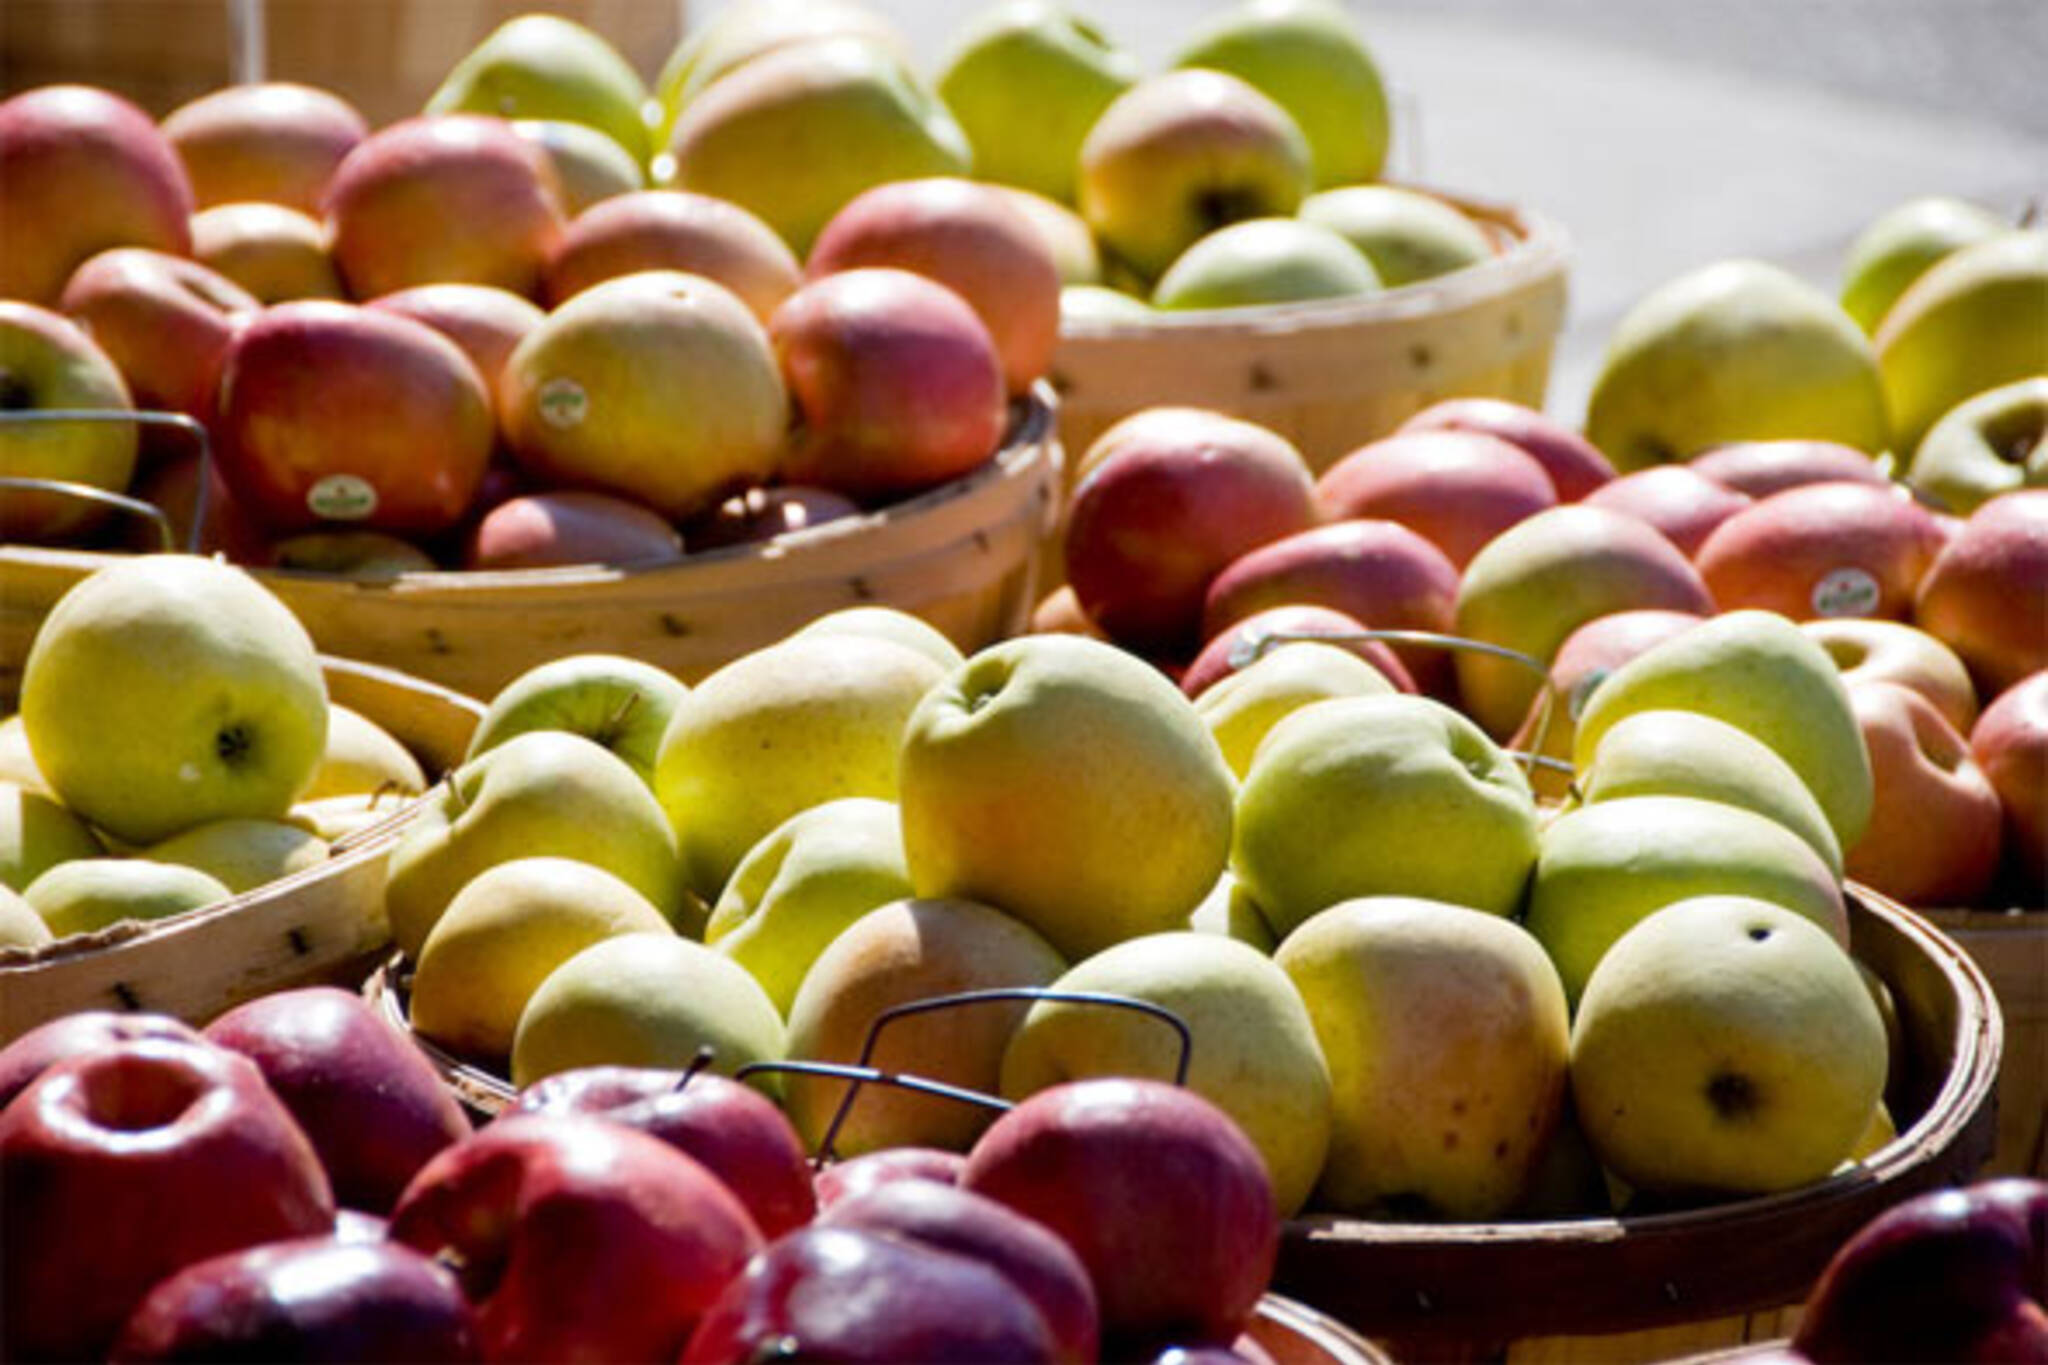 kensington market apples